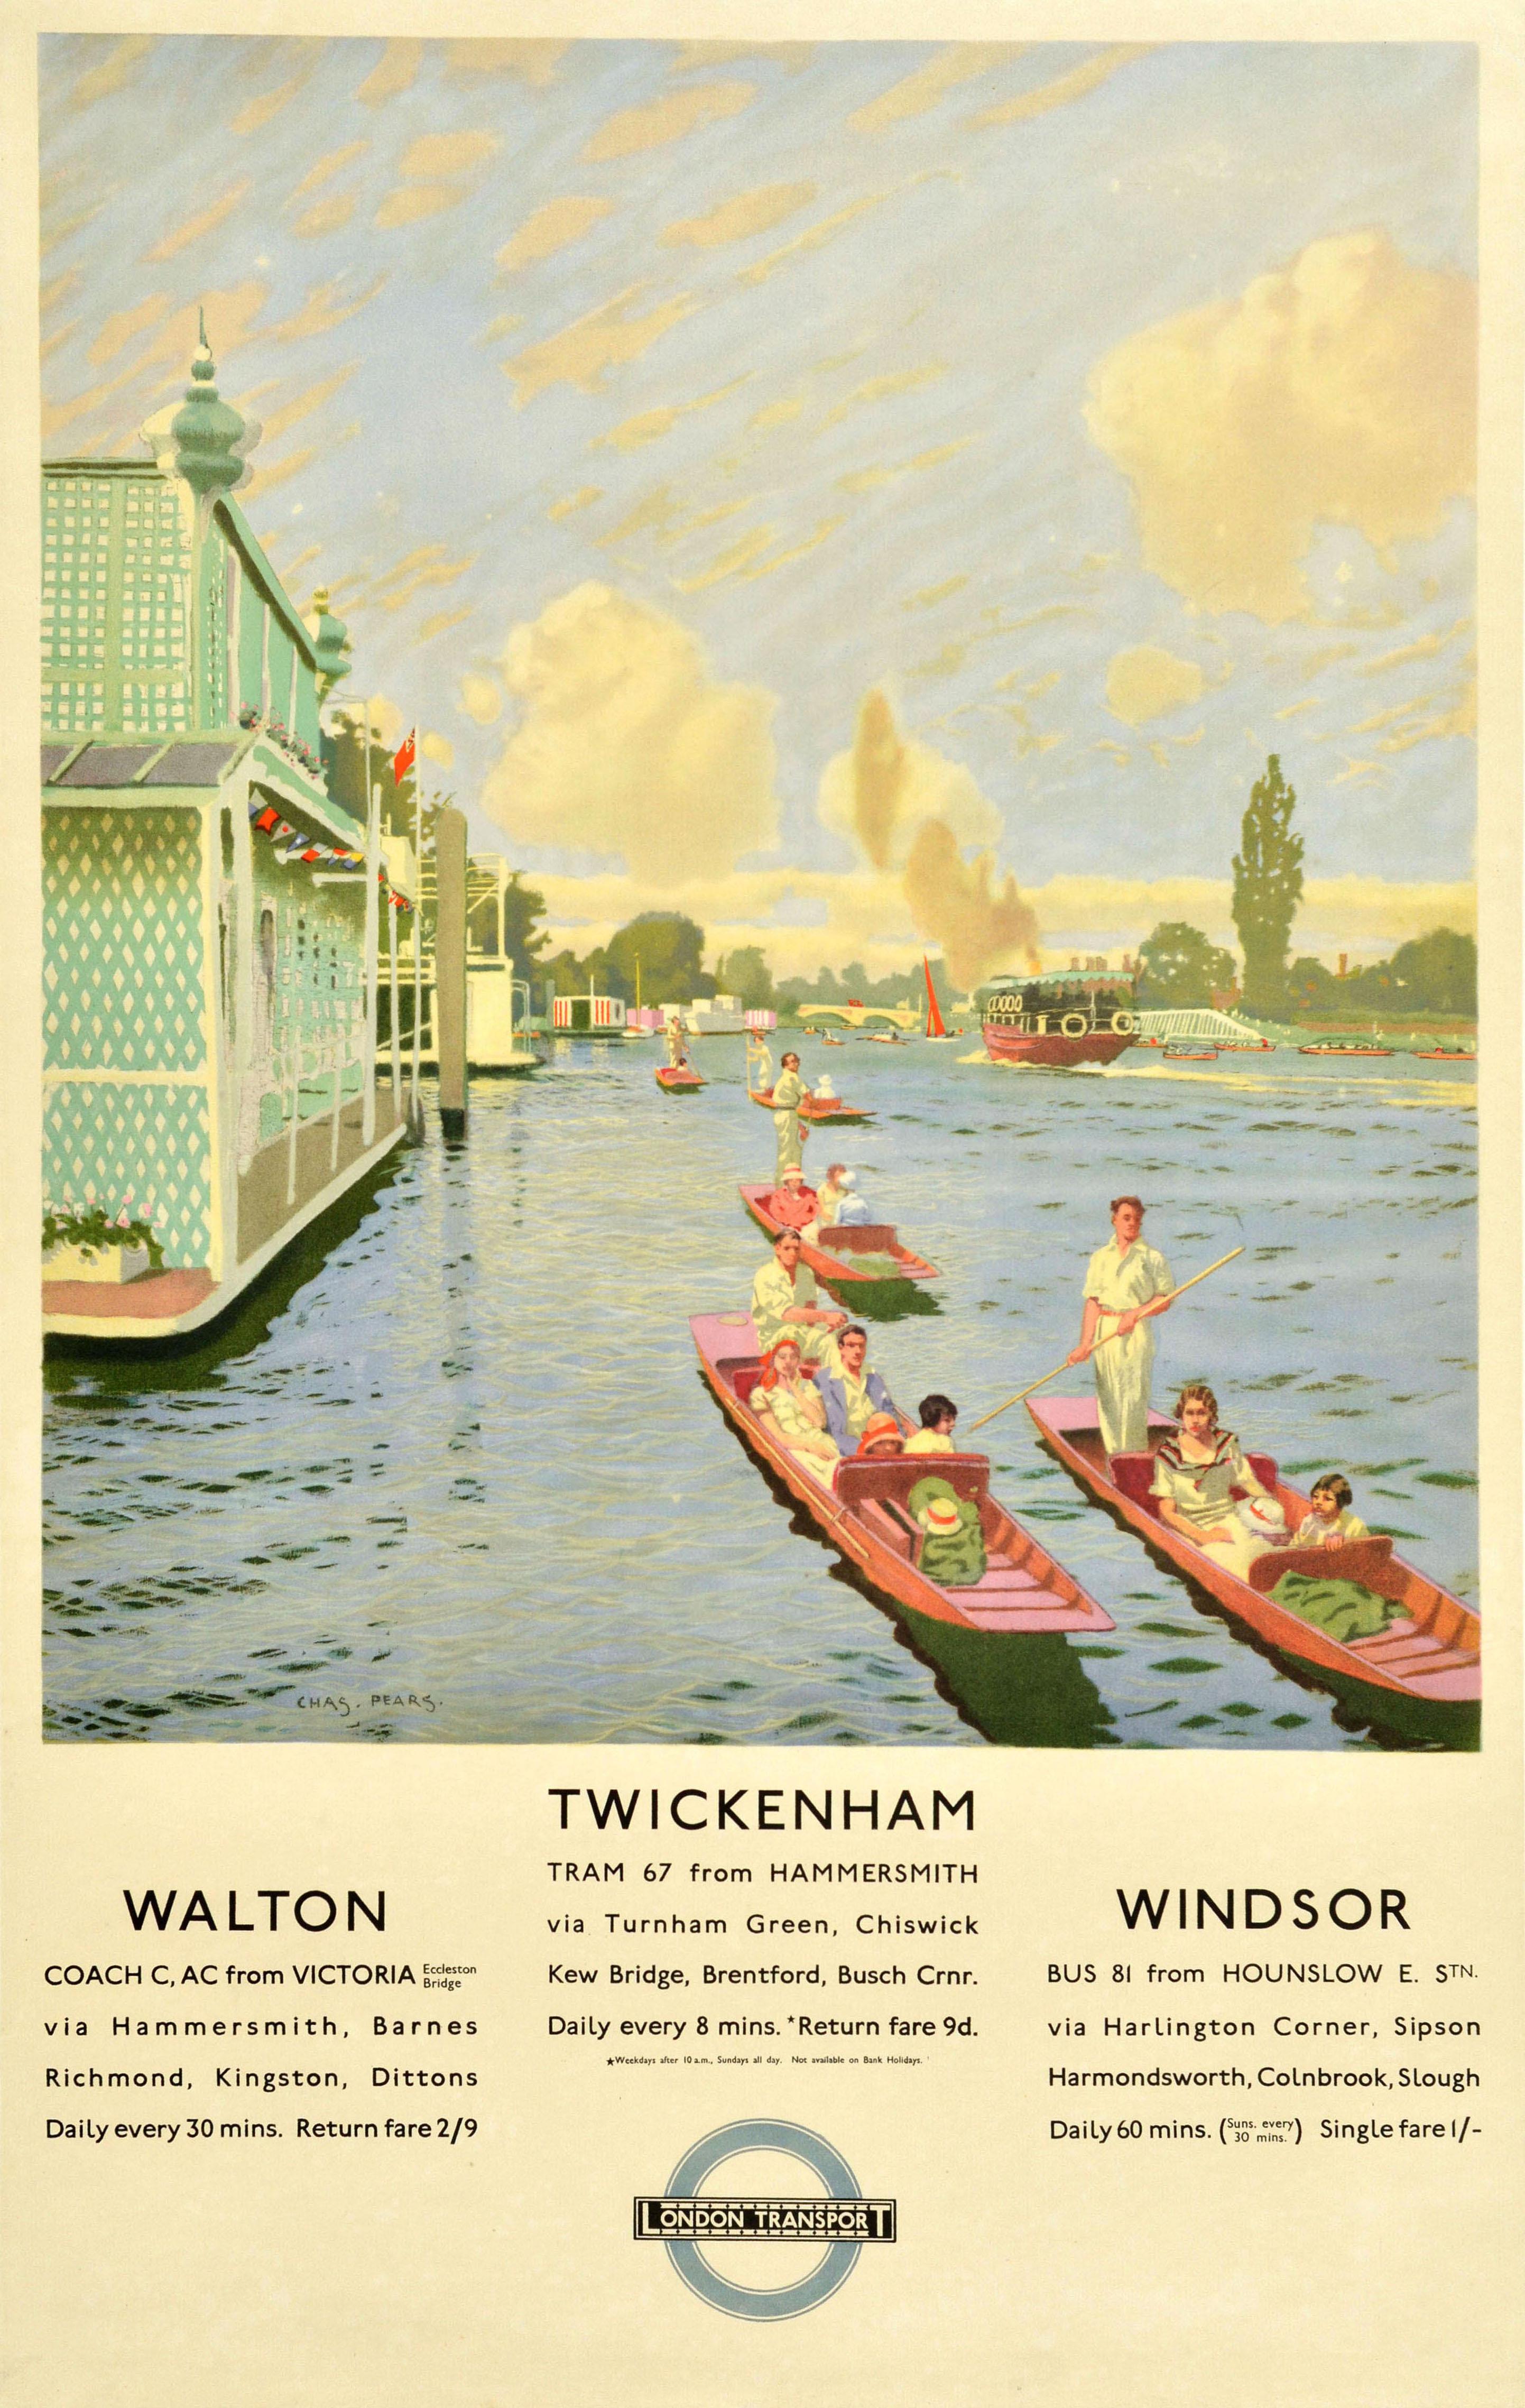 Charles Pears Print - Original Vintage London Transport Travel Poster Twickenham Walton Windsor Pears